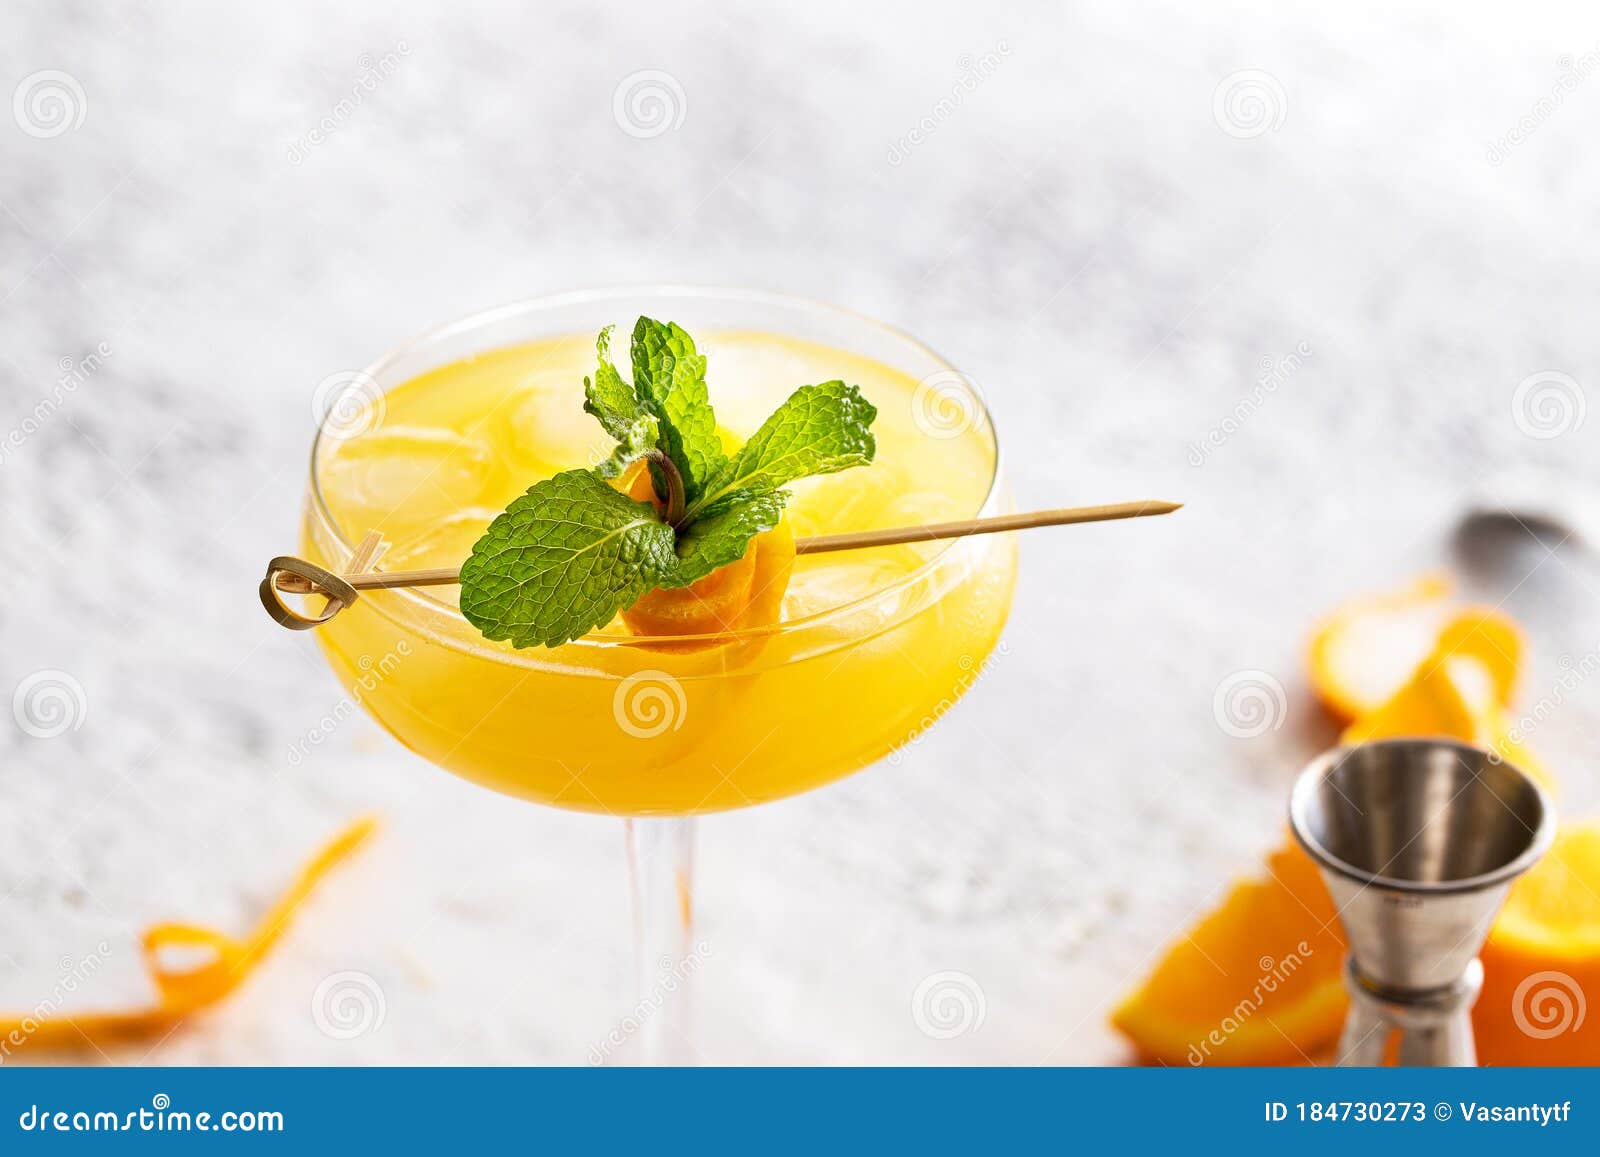 freshest cocktail for hot summer days